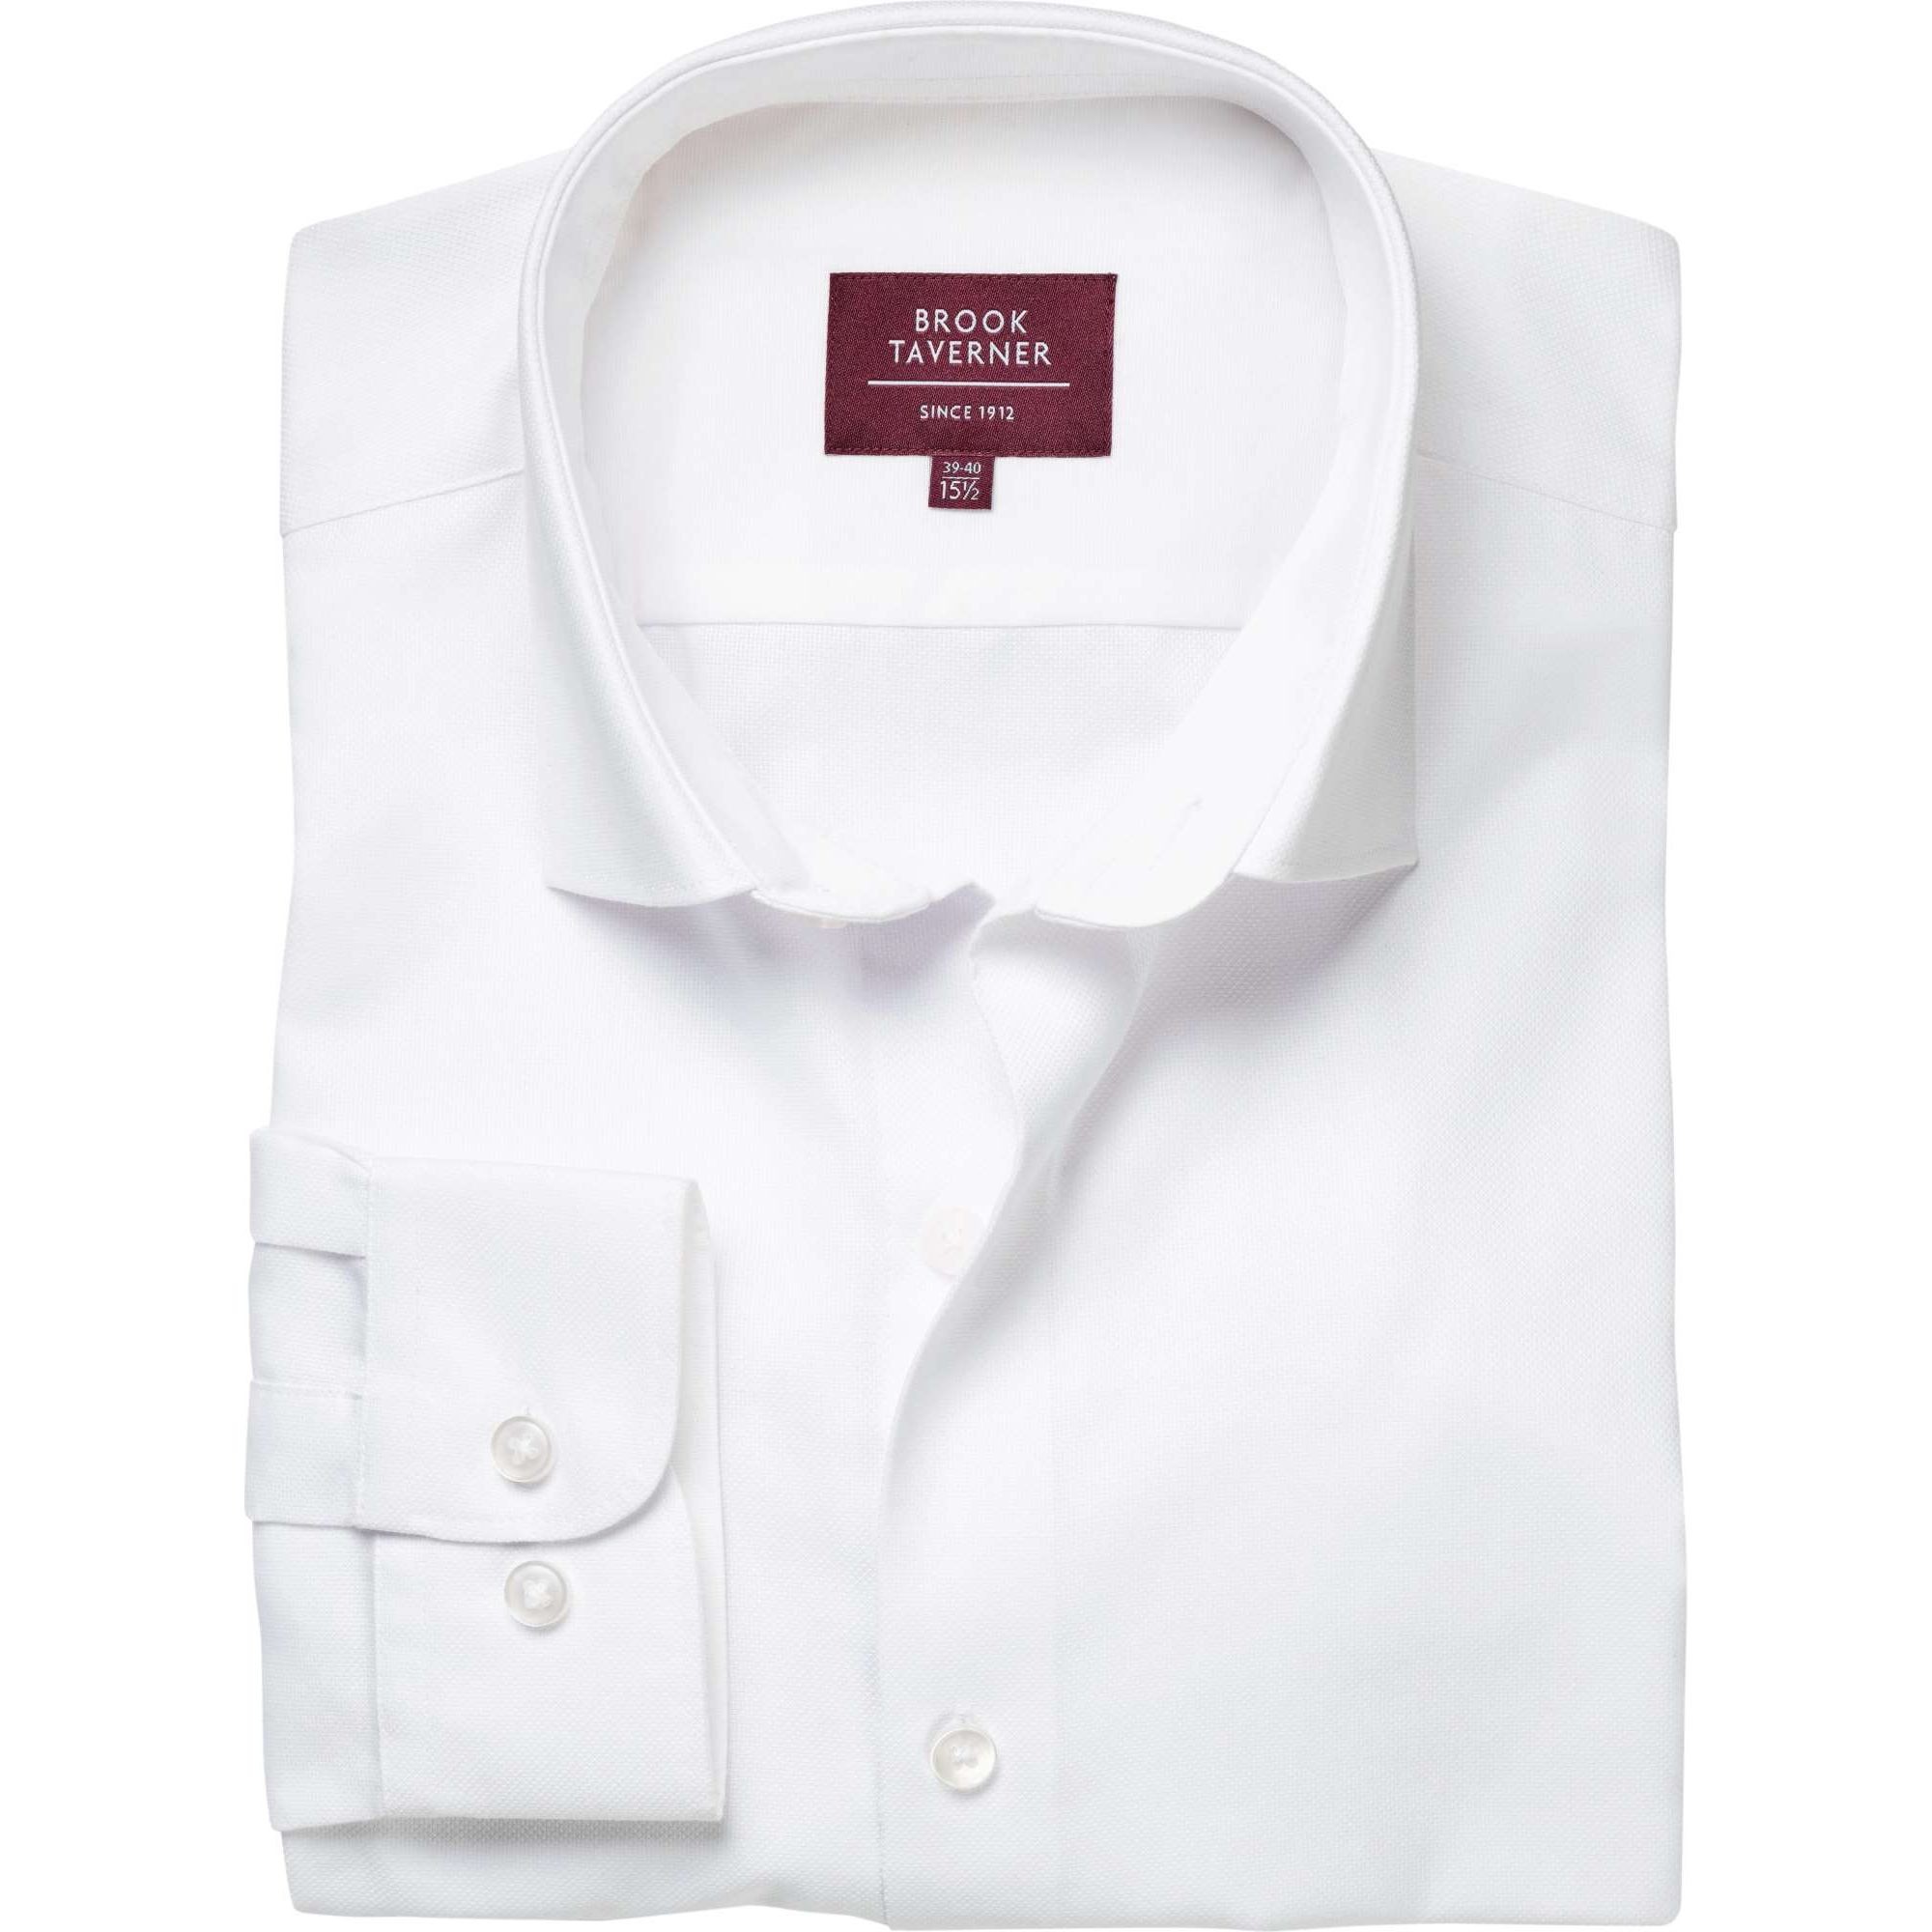 Brook Taverner Tofino Long Sleeve Oxford Shirt